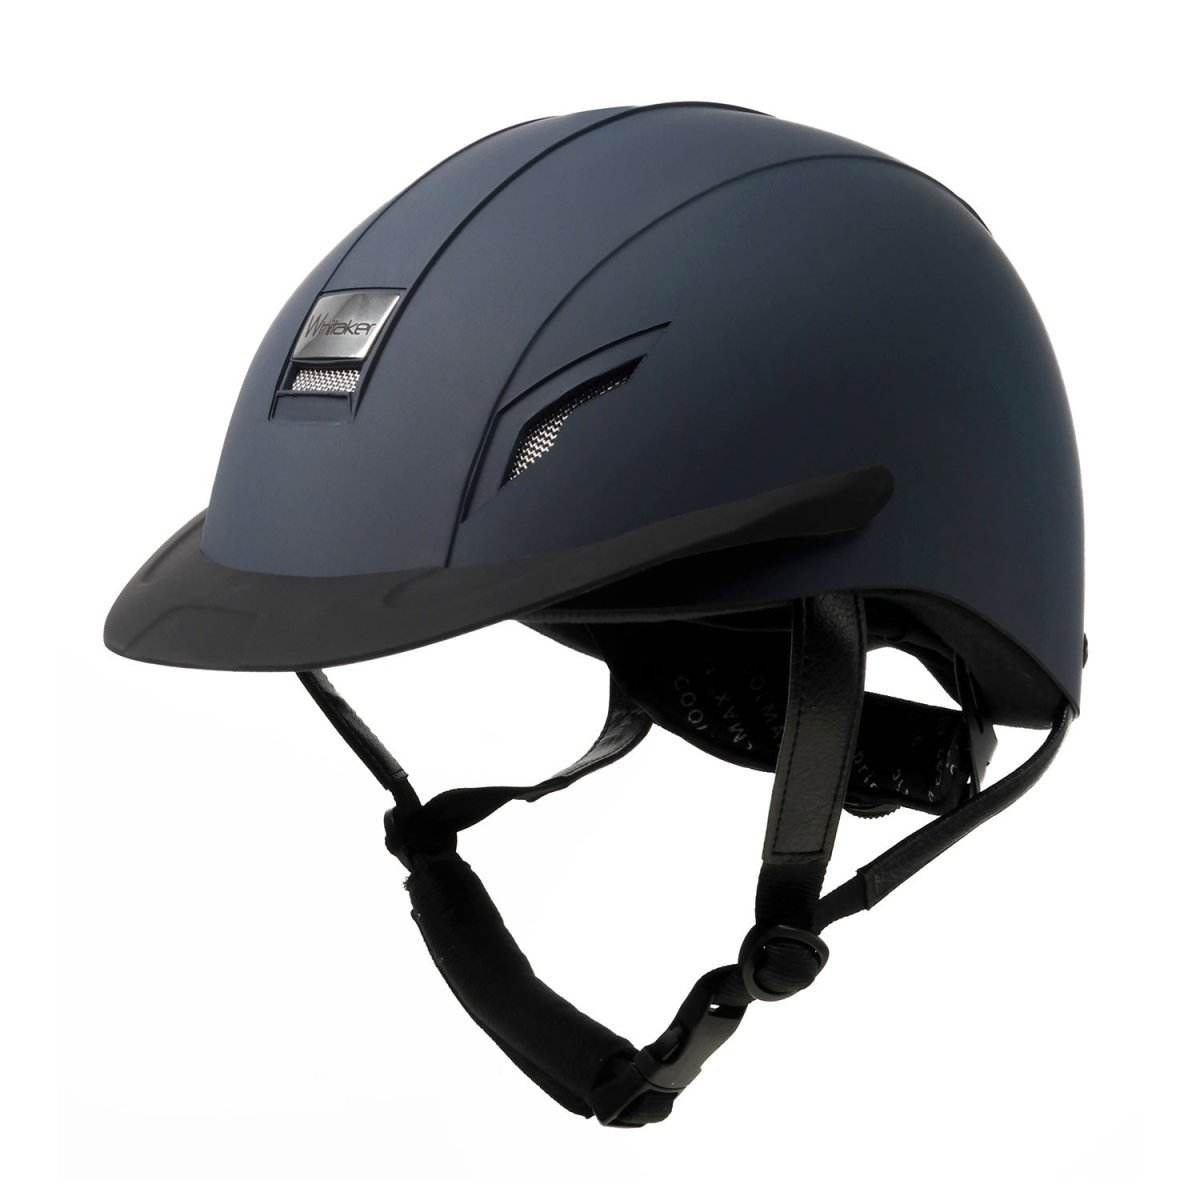 Whitaker Vx2 Riding Helmet - Navy - Small(50-54Cm)